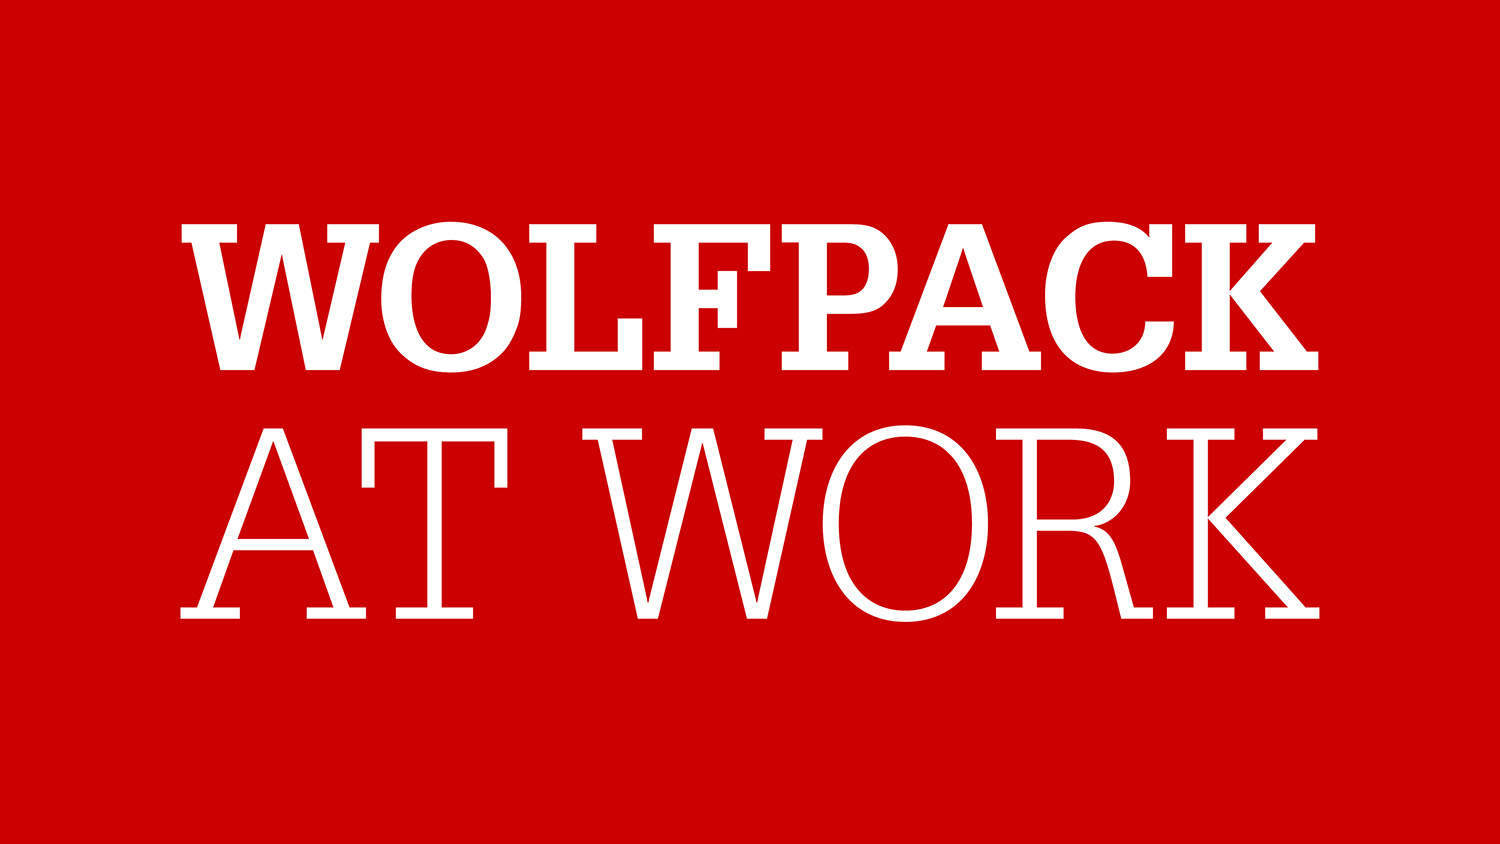 Wolfpack at Work logo.